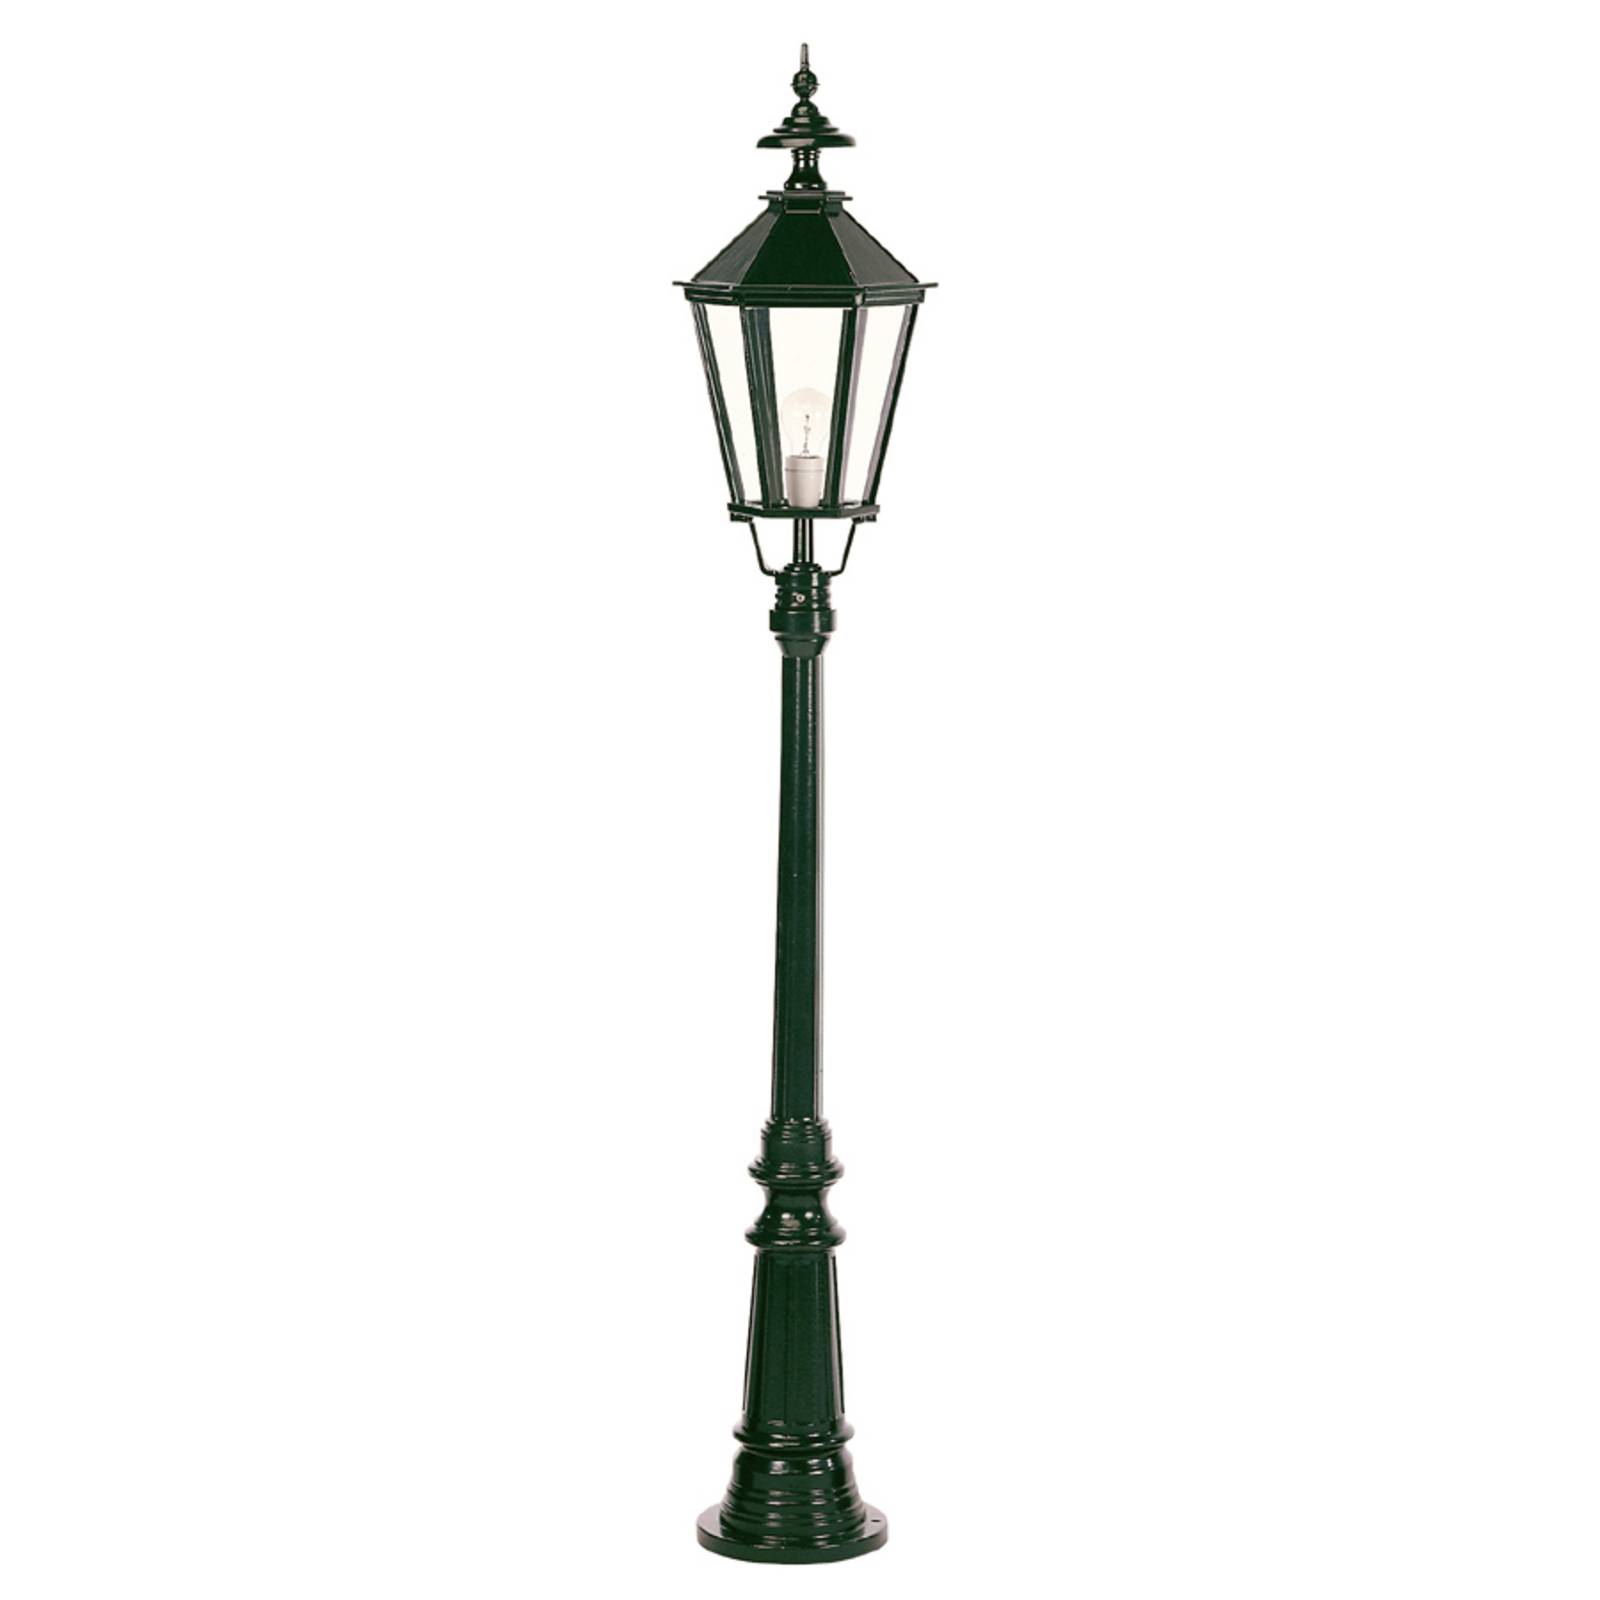 Lamp post Dublin made of die-cast alu, black